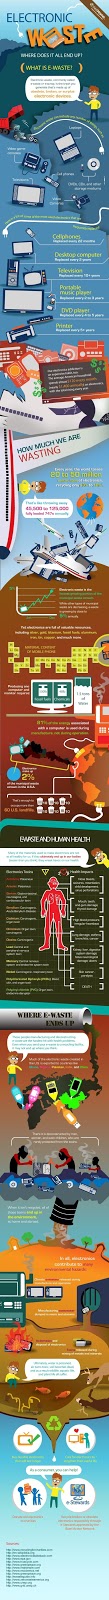 E-waste infographic